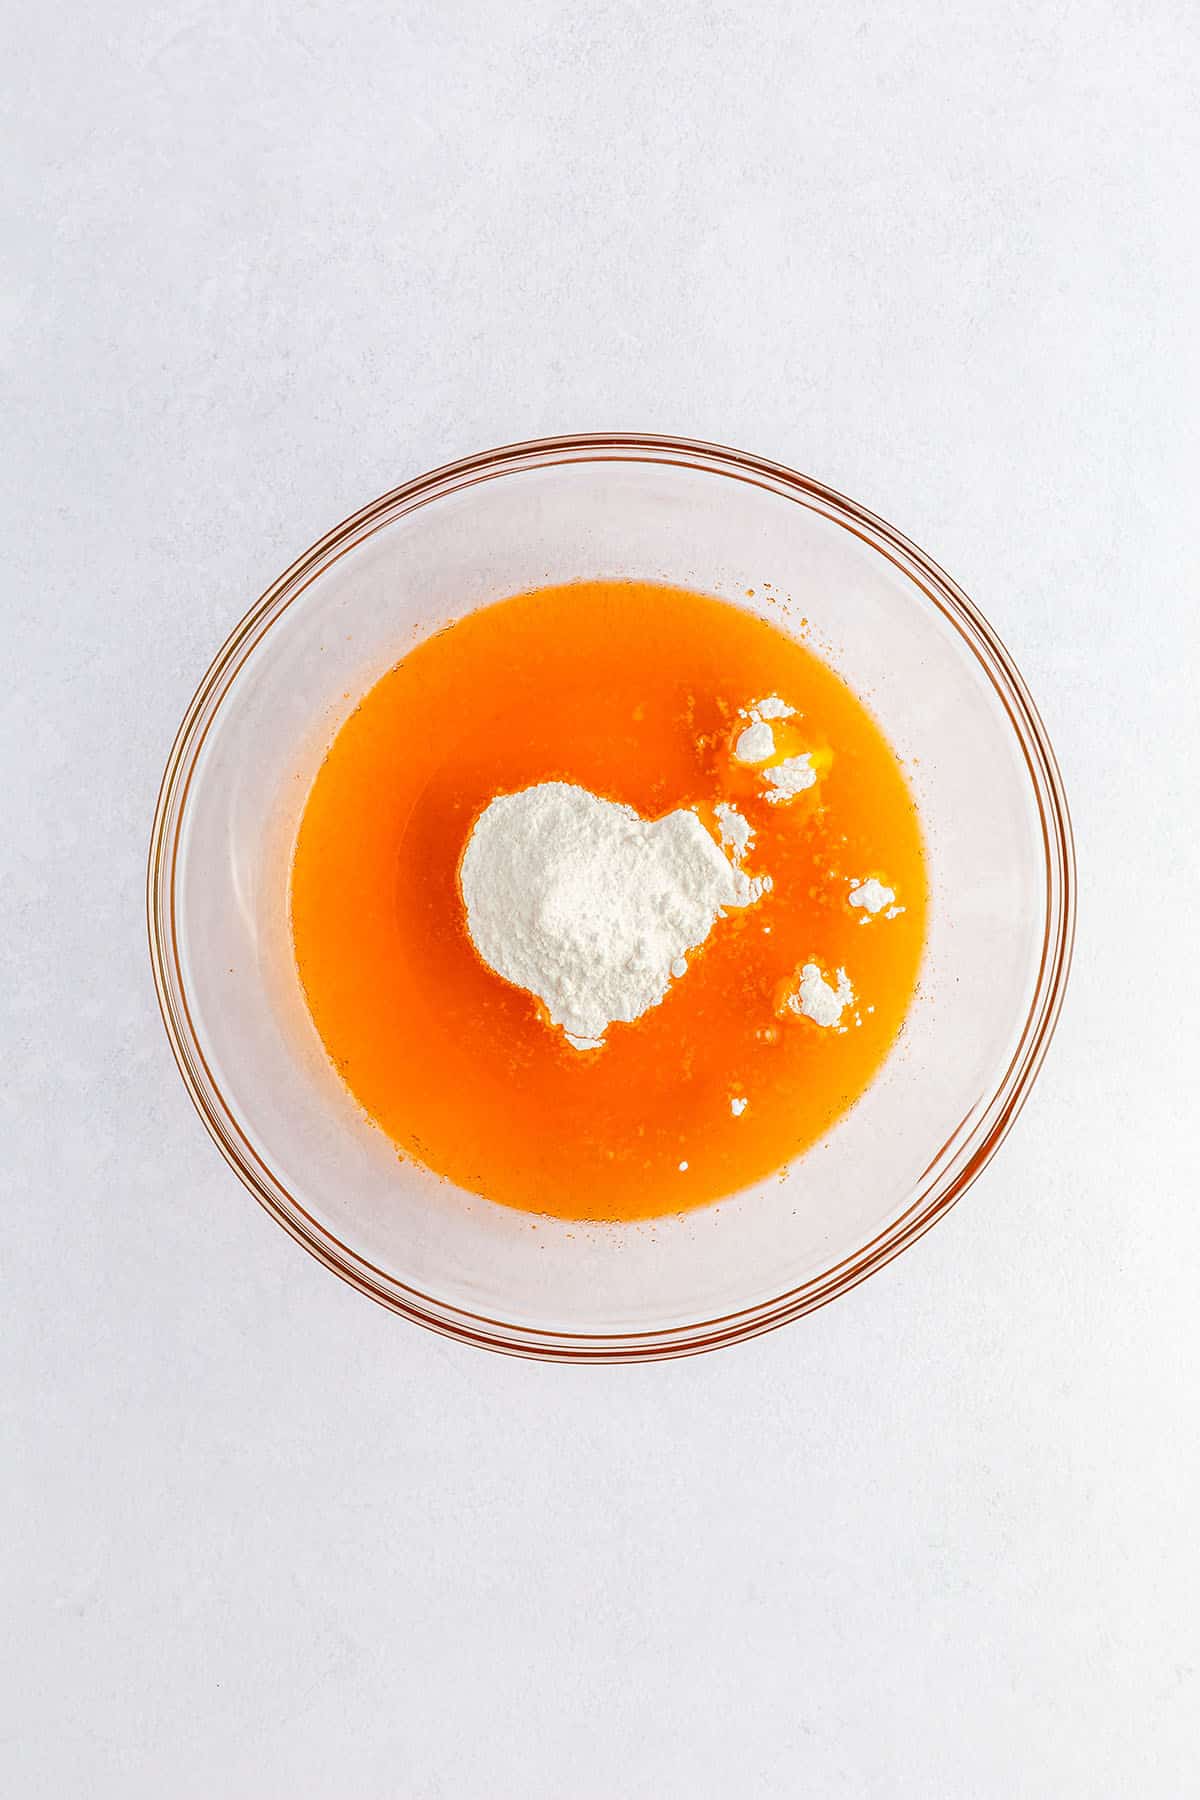 Vanilla pudding powder on top of orange Jell-O mix